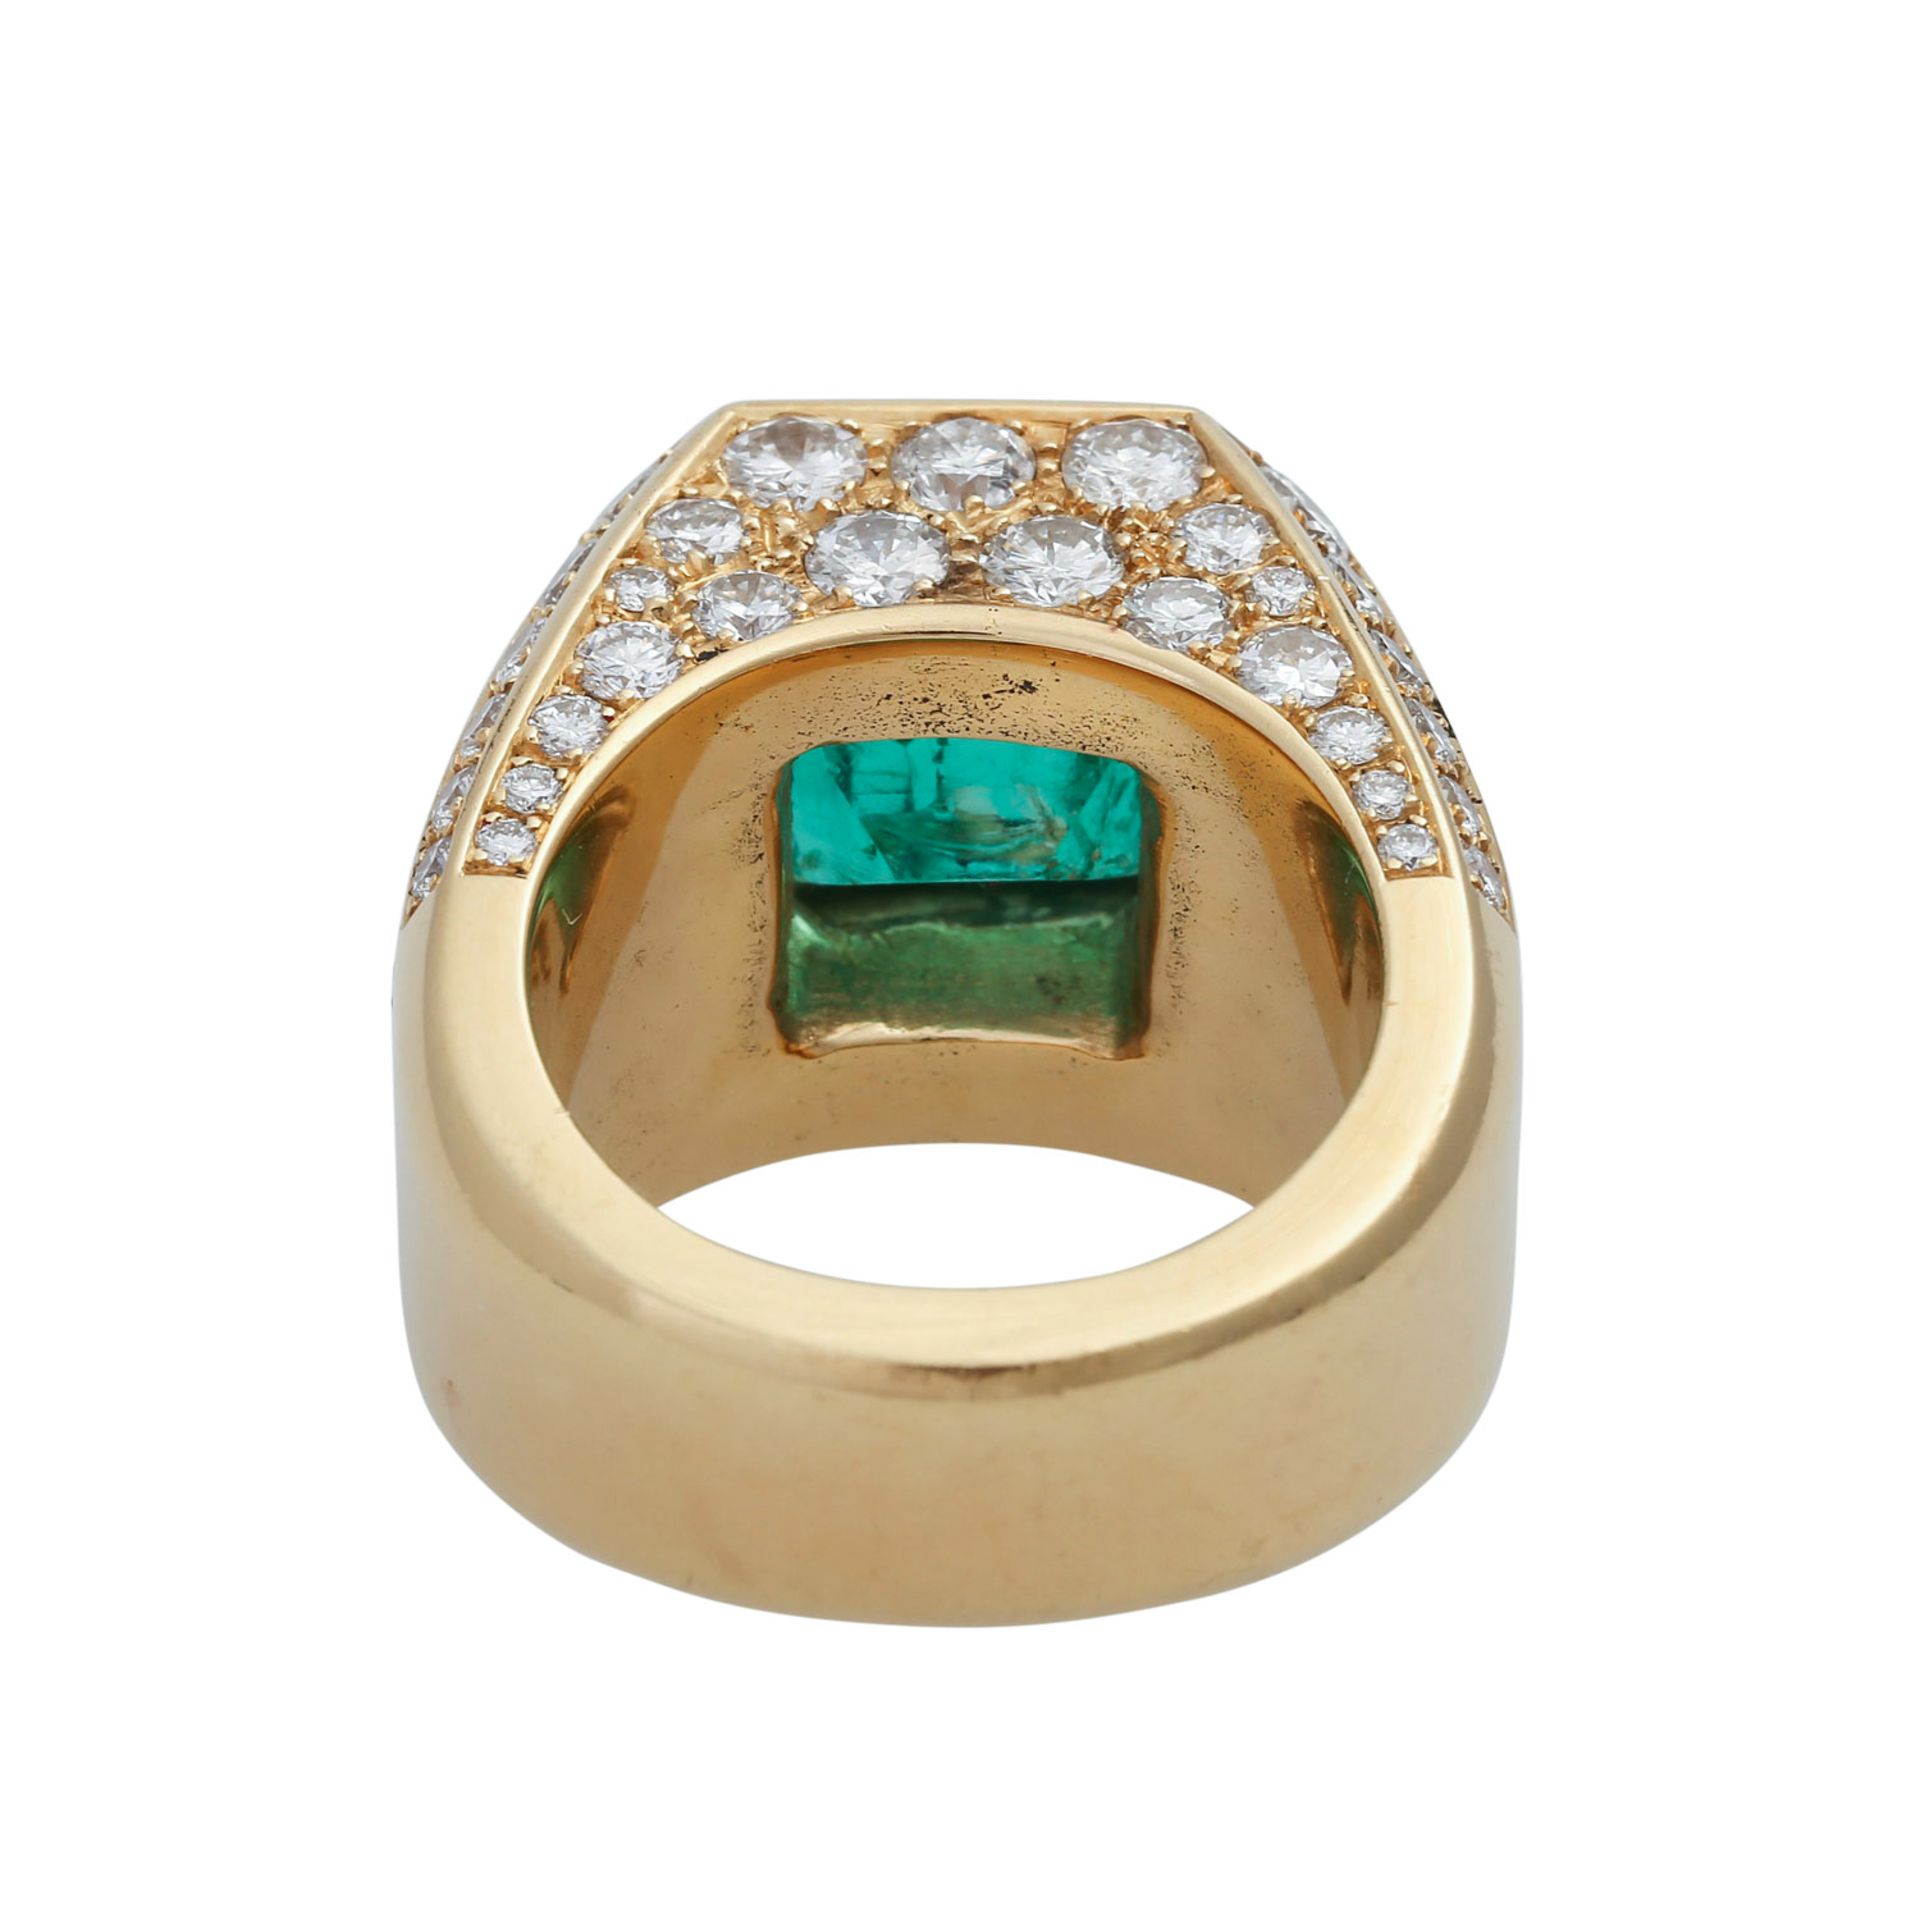 Ring mit Smaragd ca. 12 ct und Brillantenzus. ca. 5 ct WEIß-LGW (H-J)/VS-SI2, GG 18K. RW: ca. 56. - Image 4 of 6